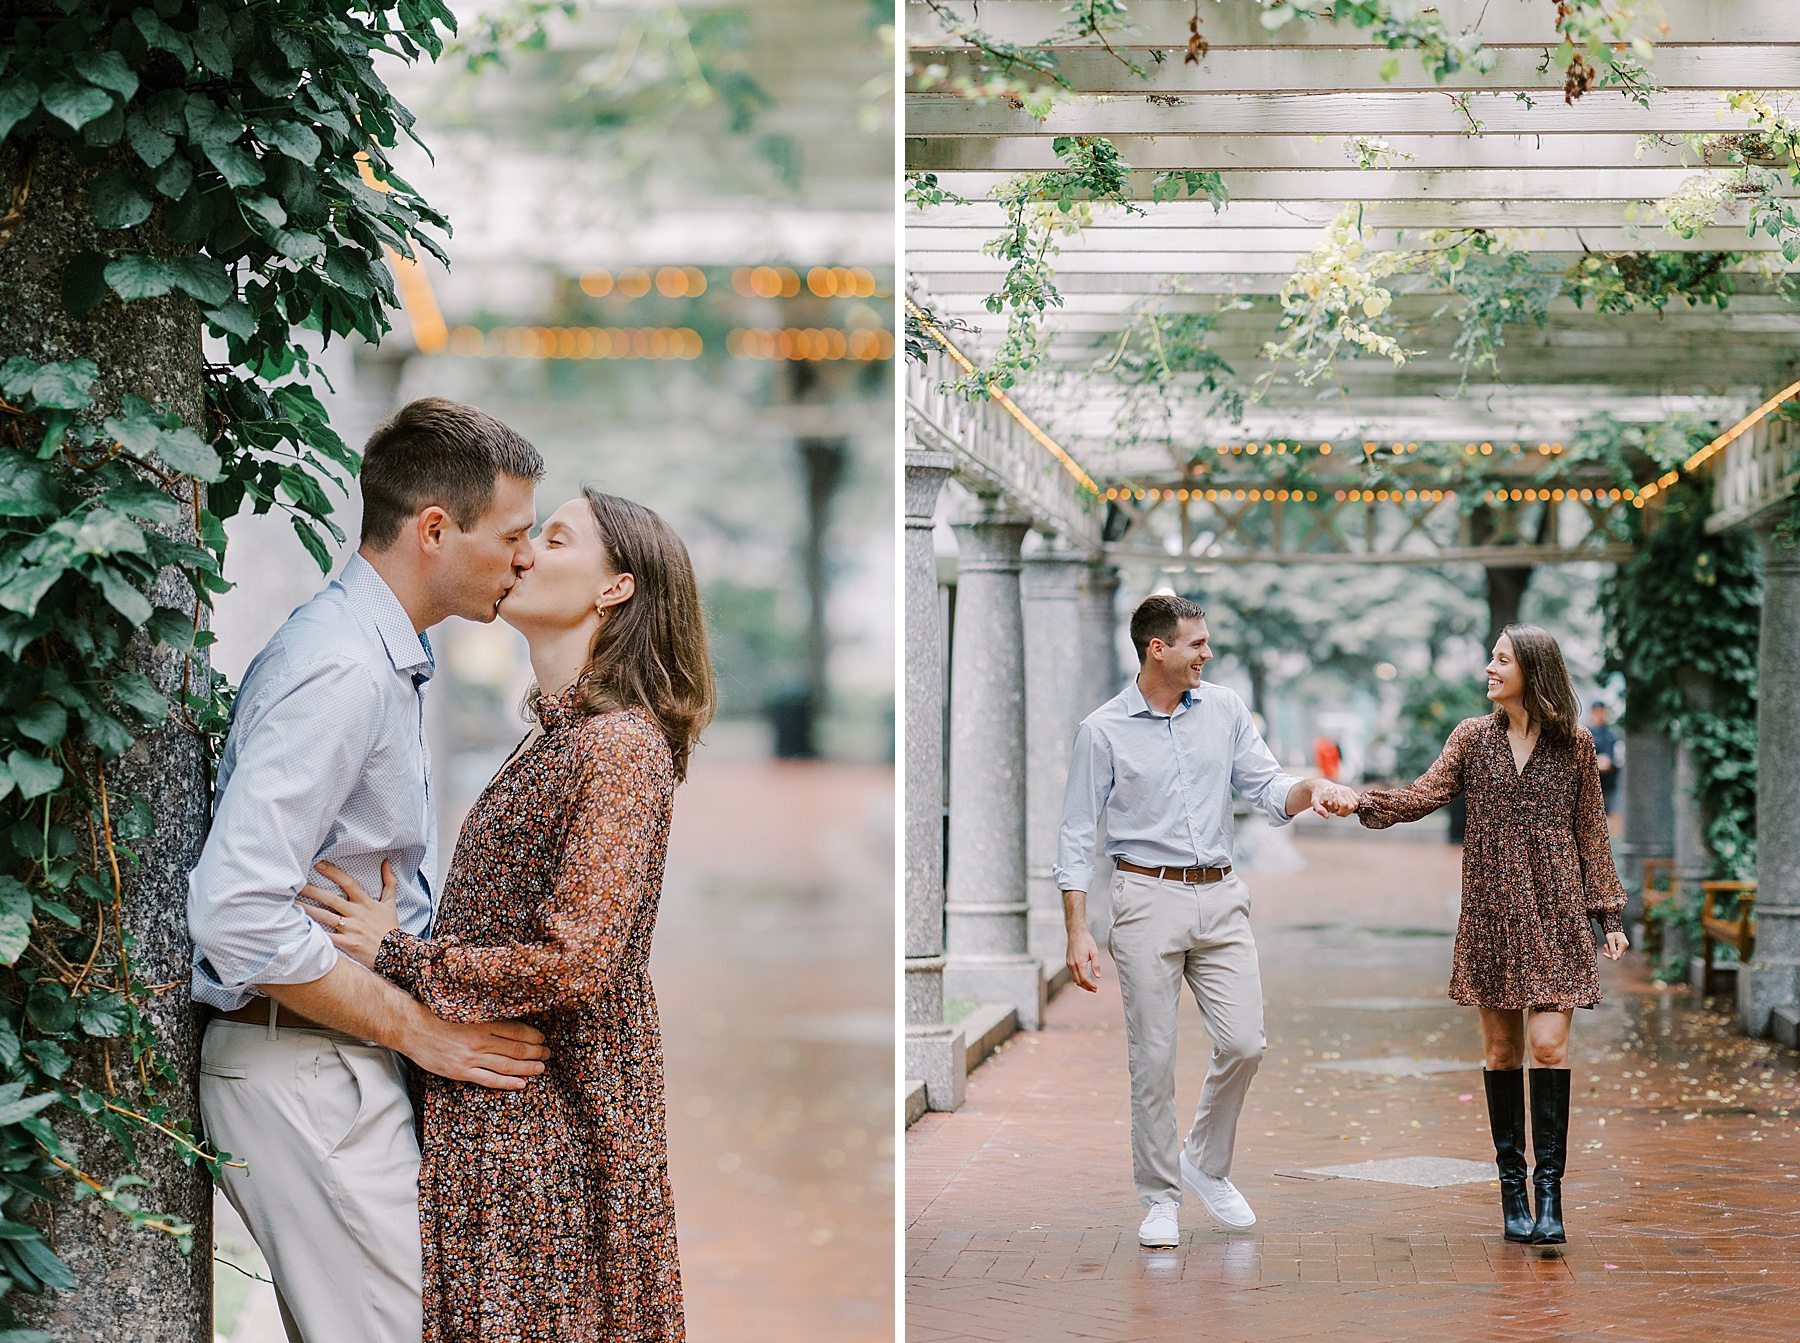 Boston Proposal photographer, Stephanie Berenson Photography, captures couple proposal 